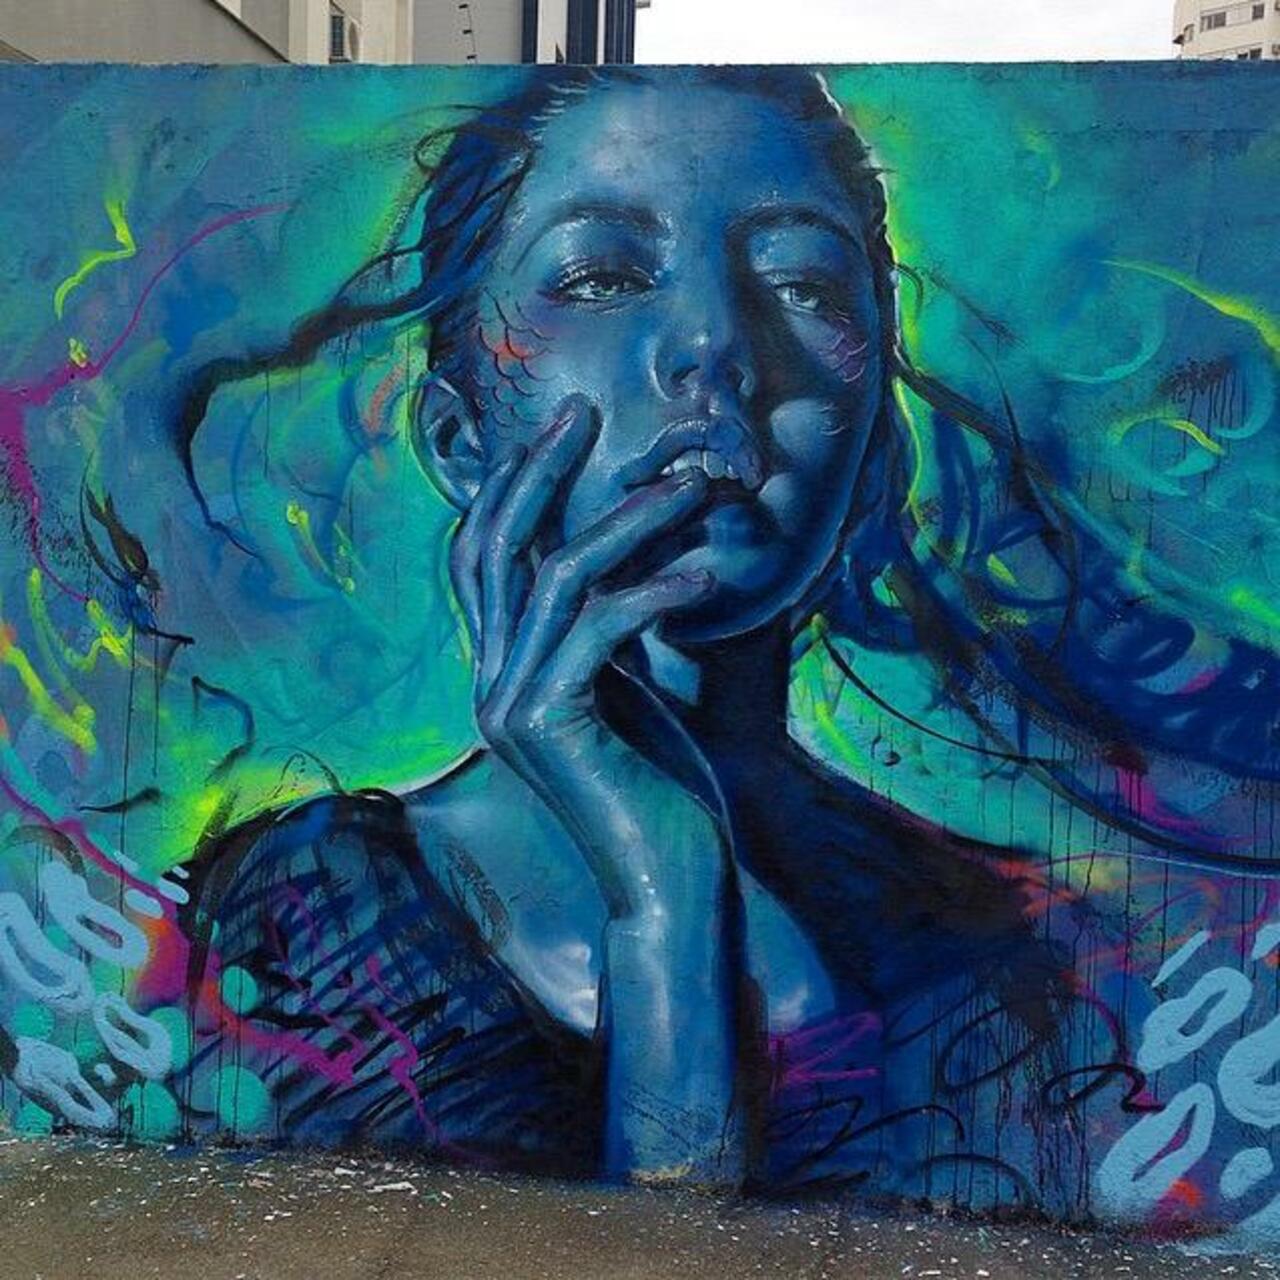 Thiago Valdi new Street Art piece titled 'Day Dreamer'

#art #mural #graffiti #streetart http://t.co/dxBMSMRnbG